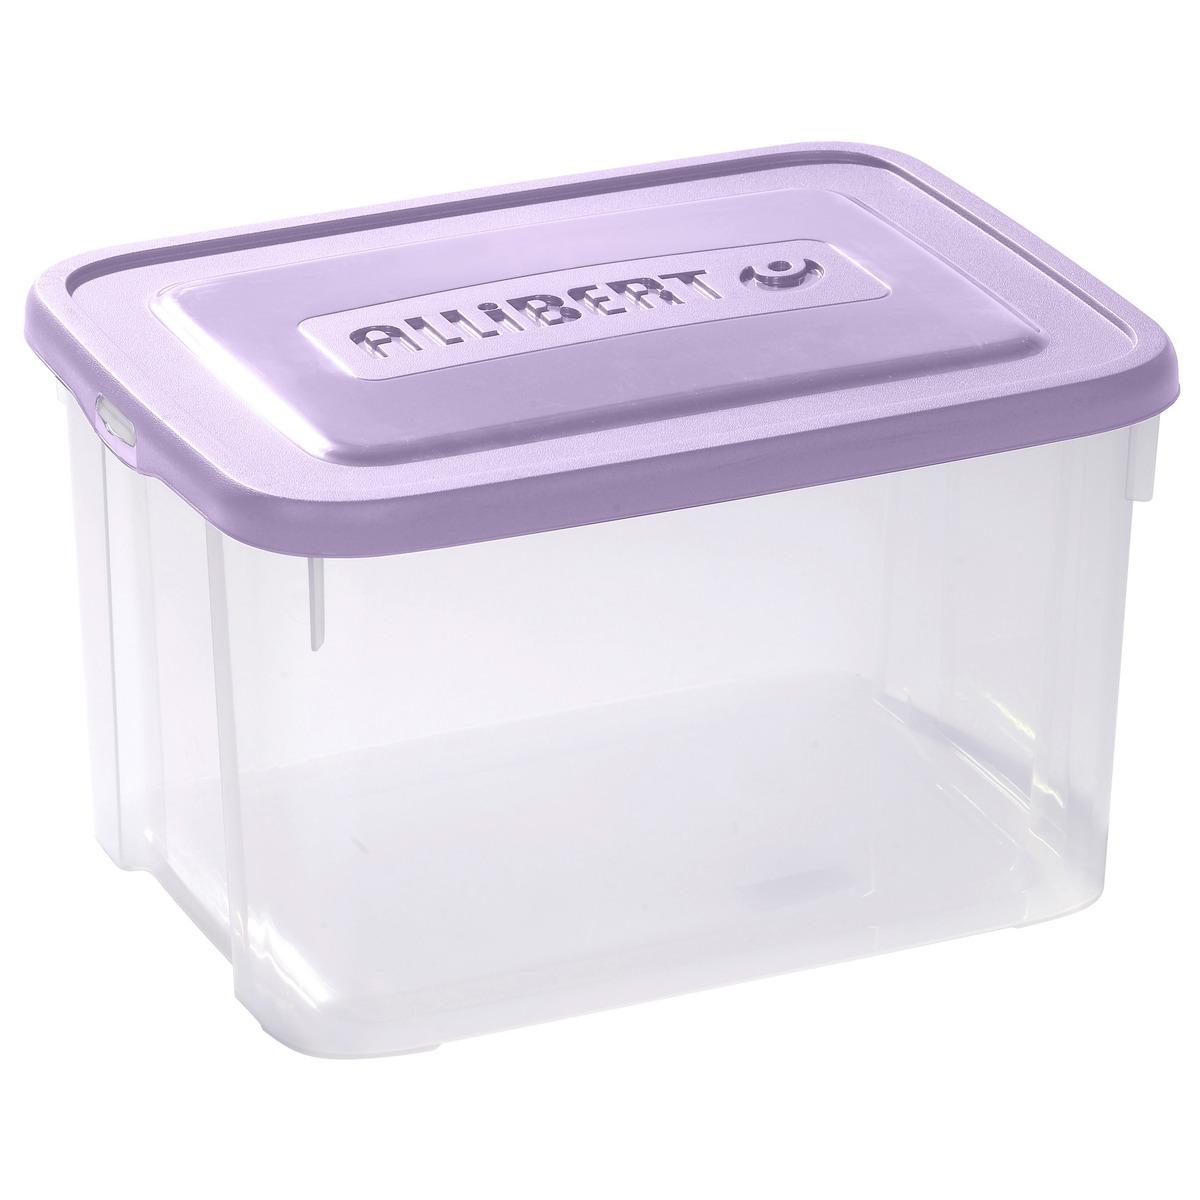 Box de rangement 12 litres Allibert en plastique - violet, transparent